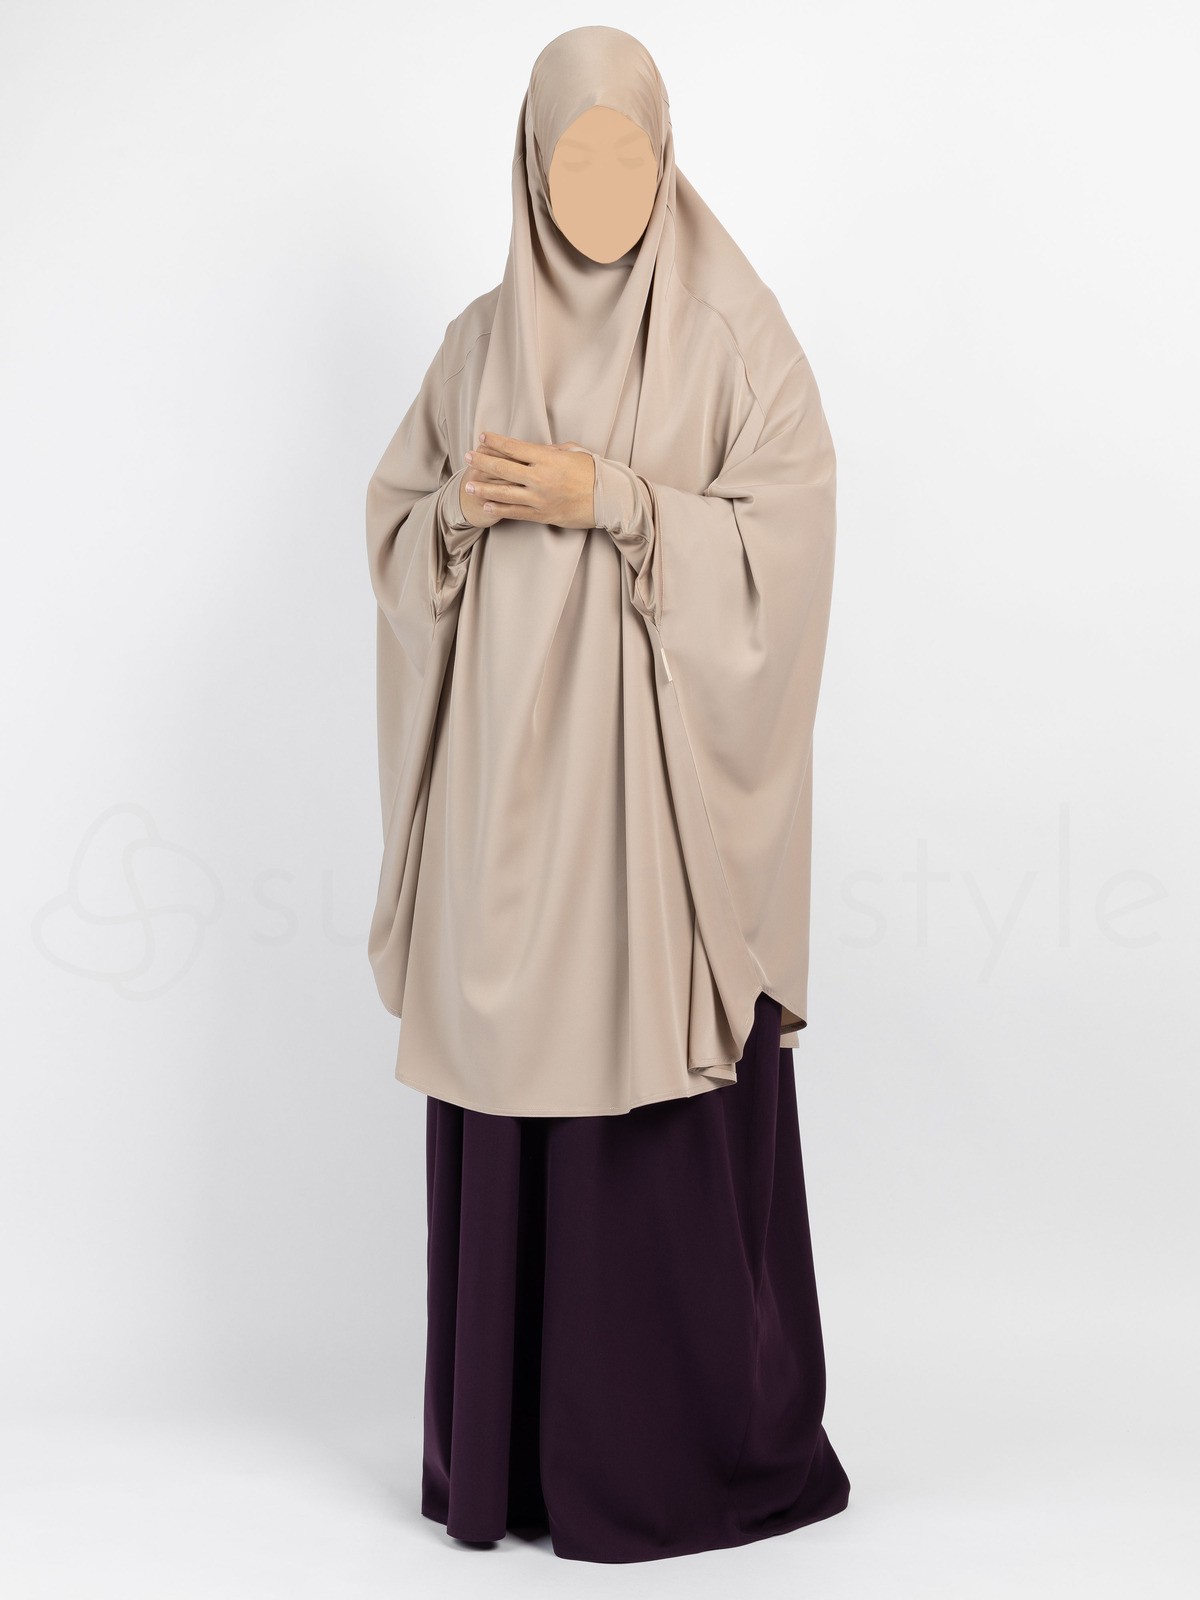 Sunnah Style - Signature Jilbab Top - Knee Length (Sahara)